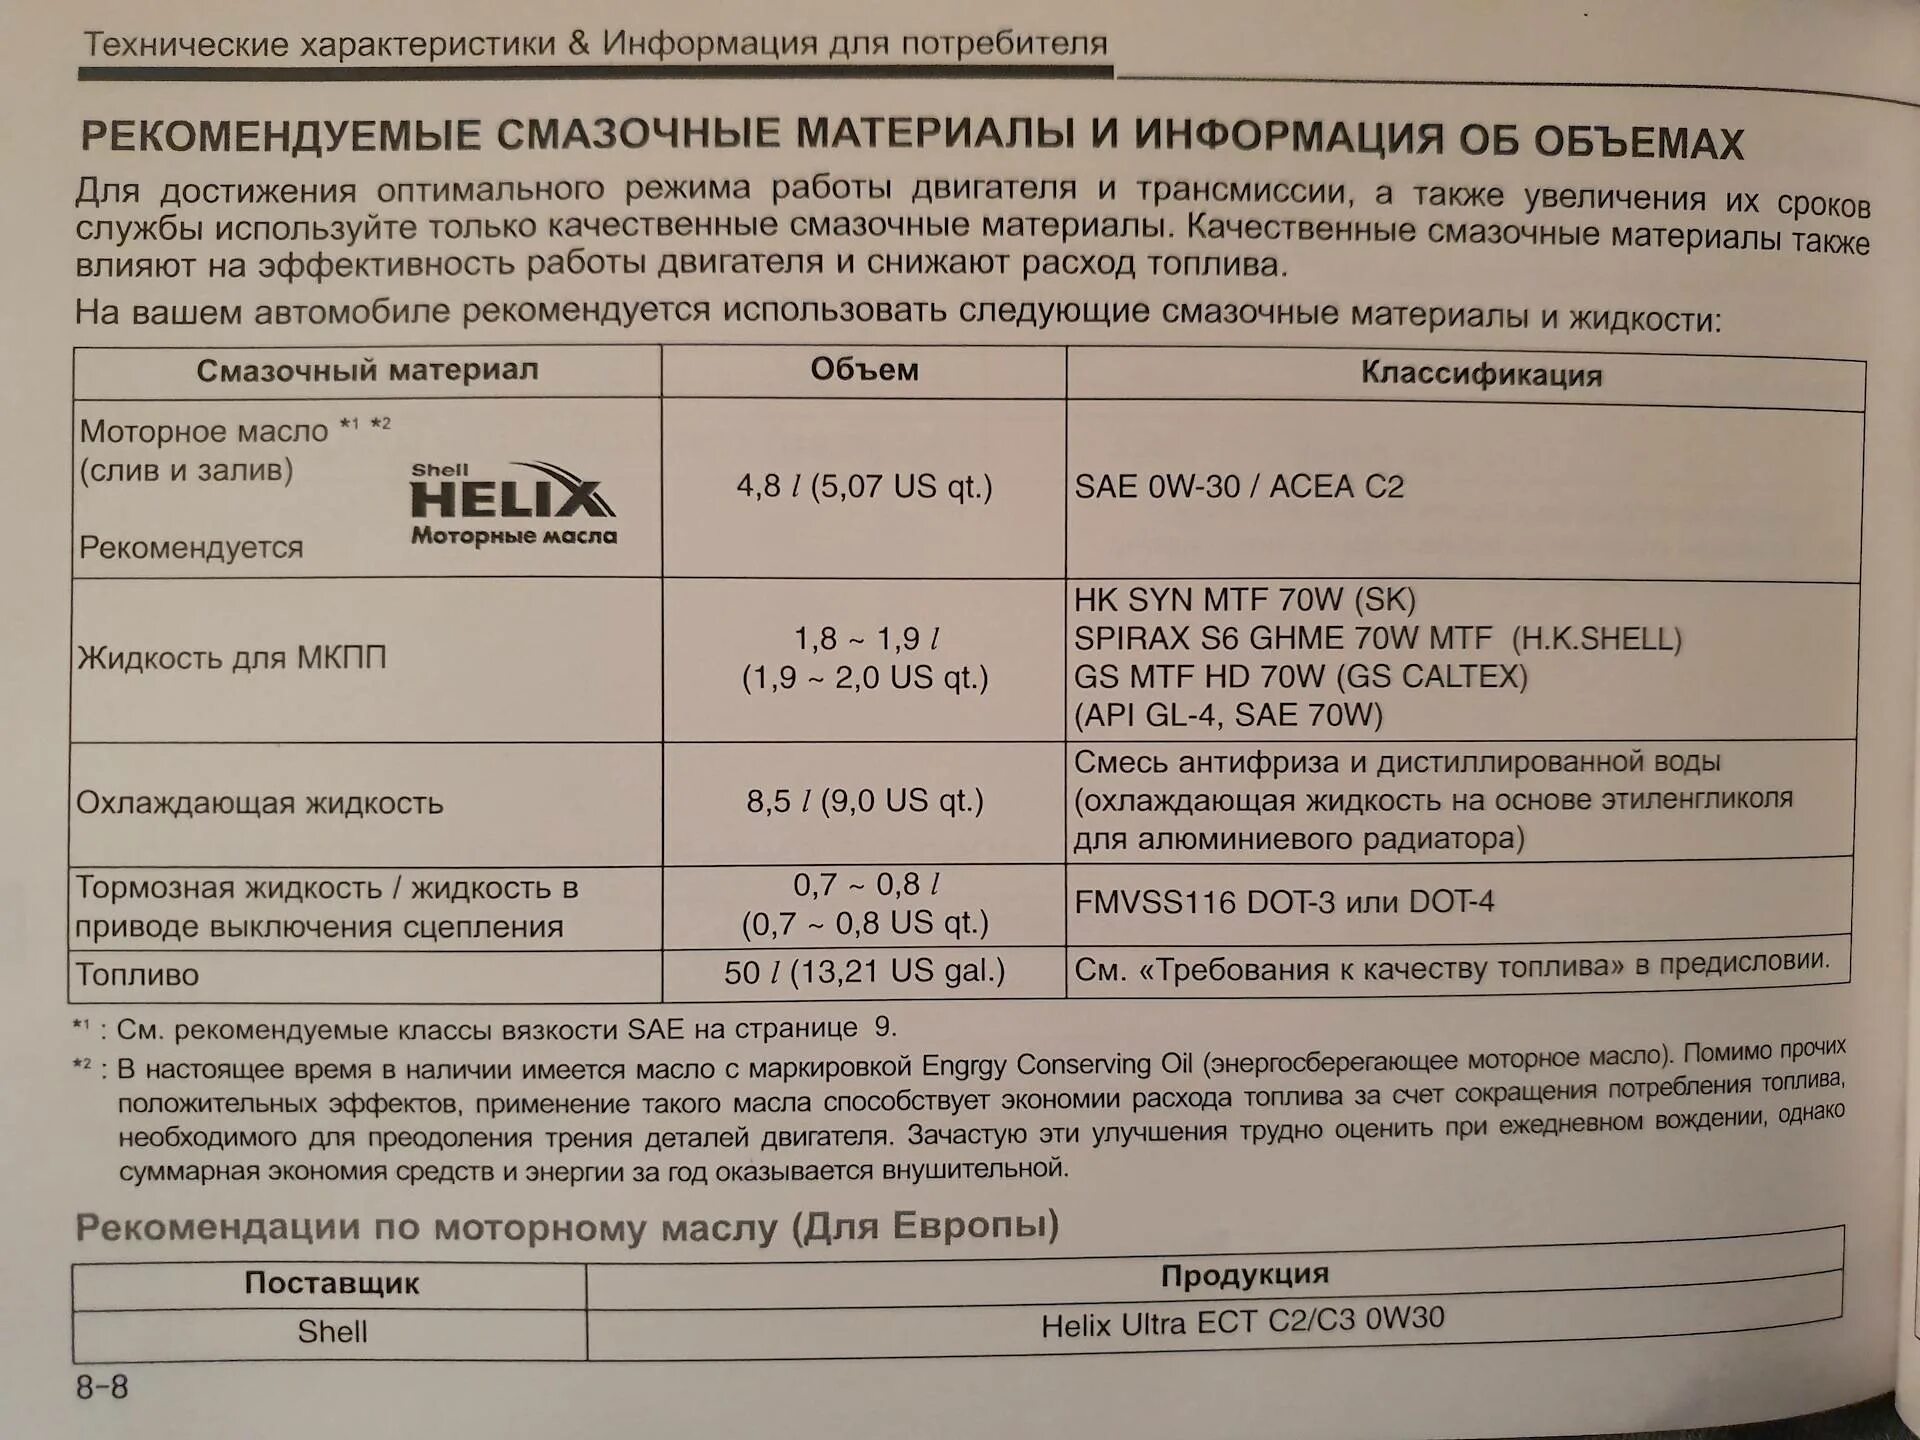 Допуски масла для Хендай Солярис 1.6. Solaris Hyundai 2015 допуски масла 1,6. Допуски моторного масла Хендай i30 1,6. Допуски масла Хендай Солярис 1.4.